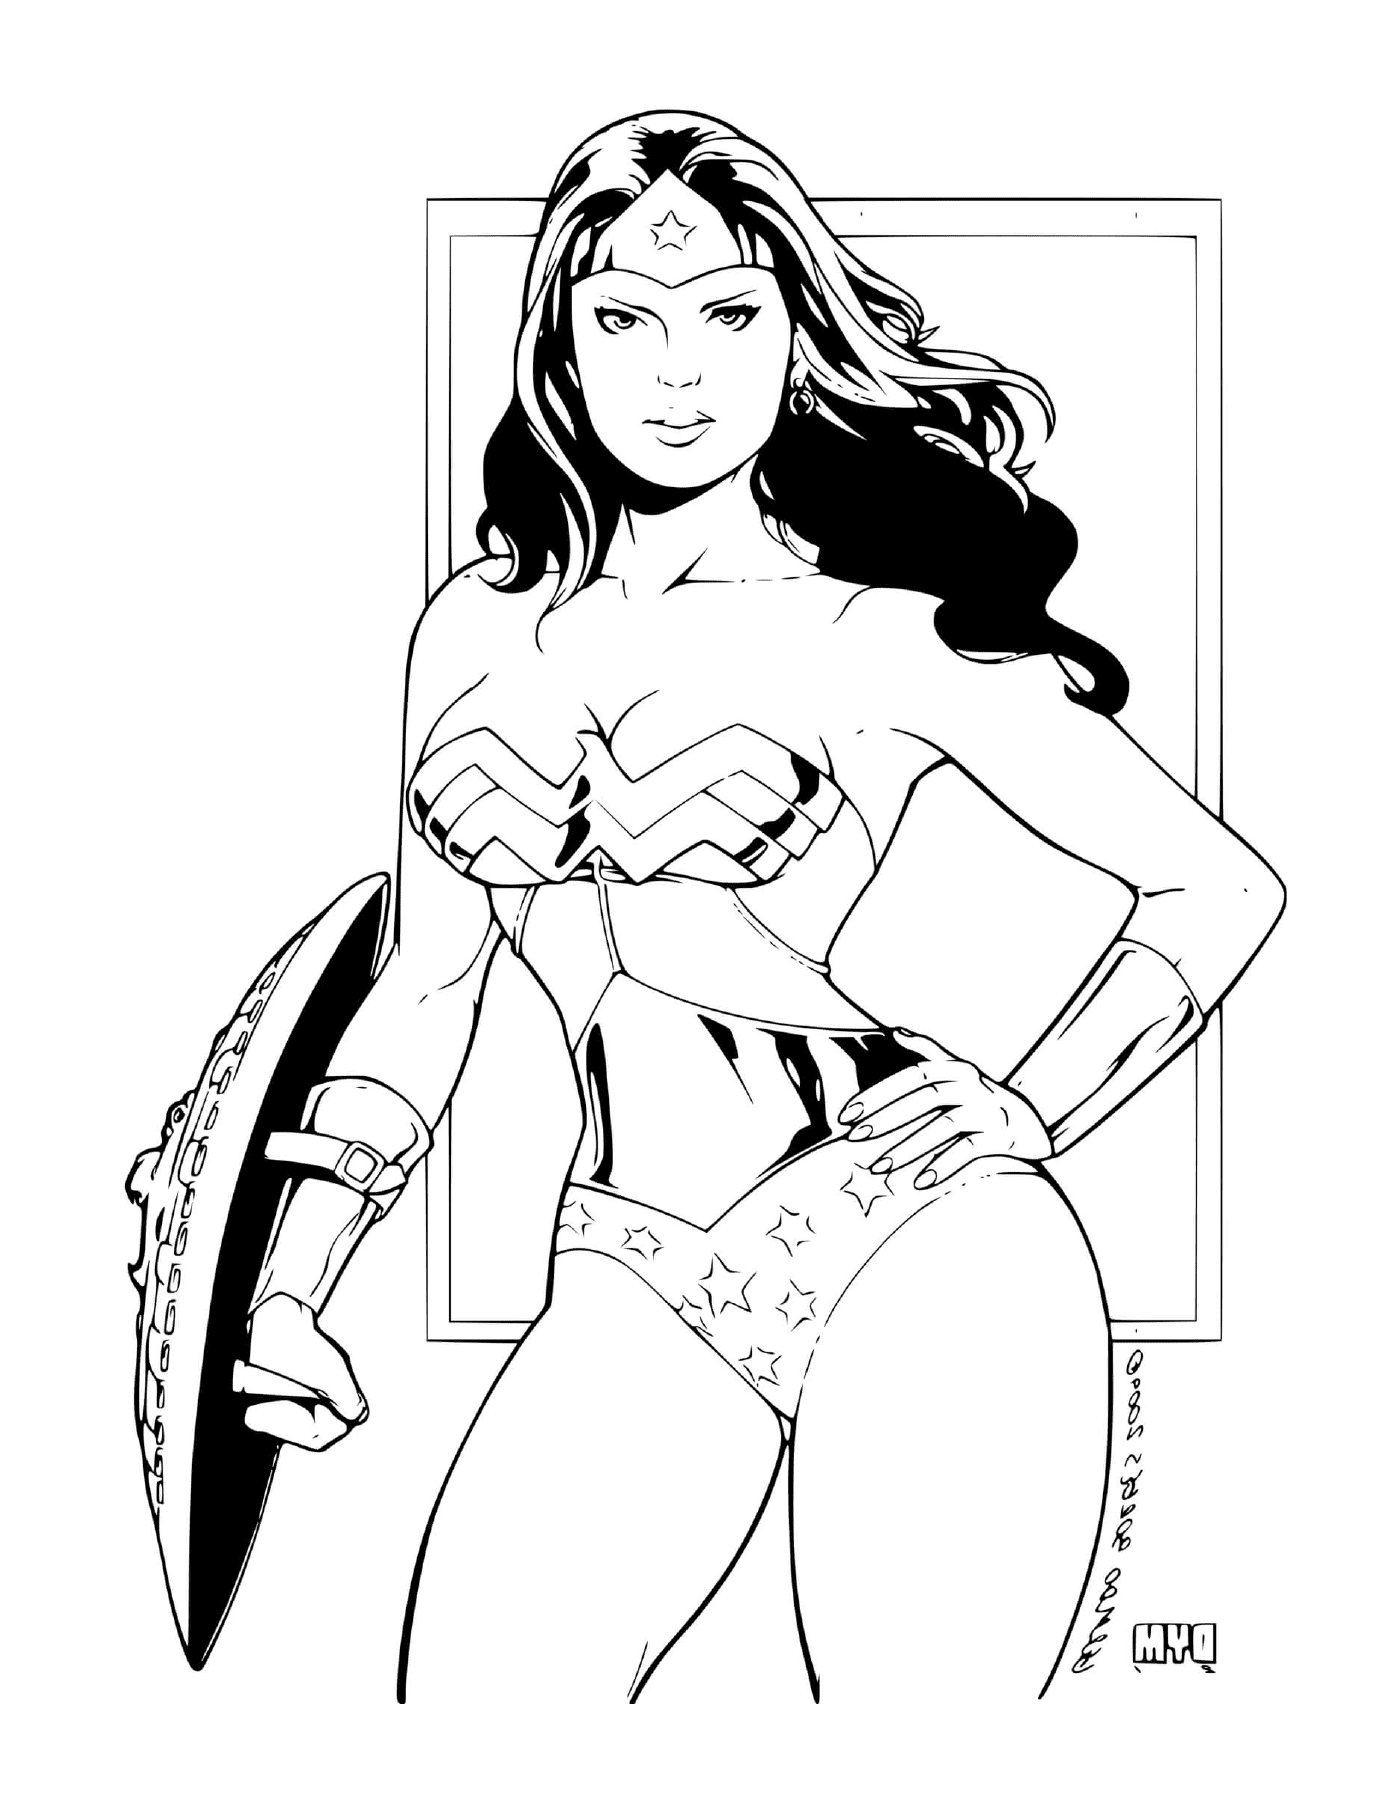  Wonder Woman in drawing by Dymartgd 